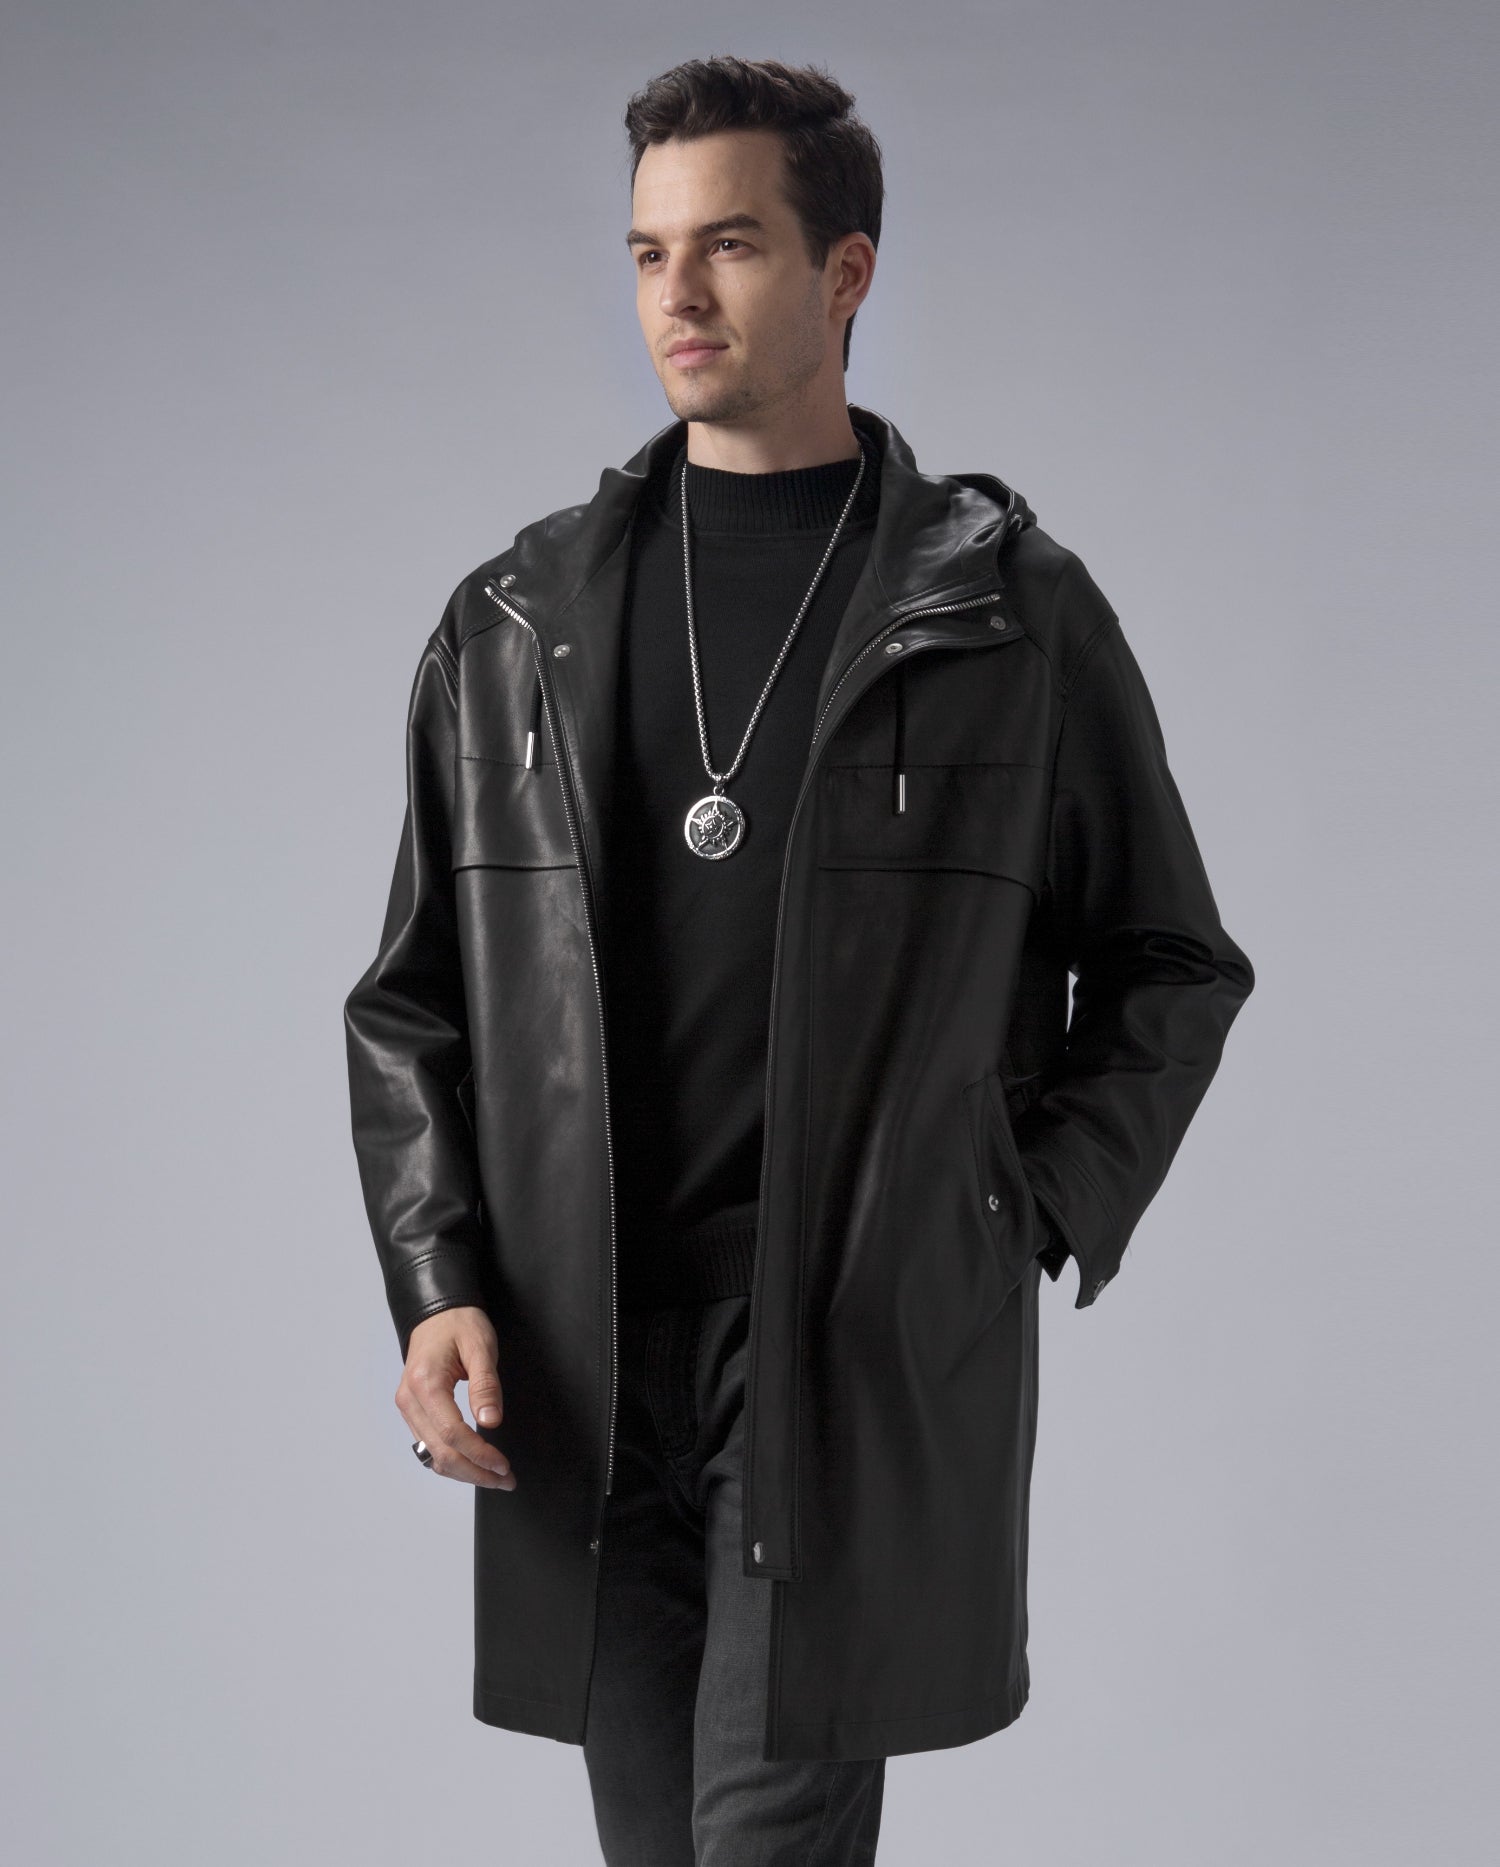 Genuine Crocodile leather BLACK jacket Winter Fashion Jackets and coats For  Men’